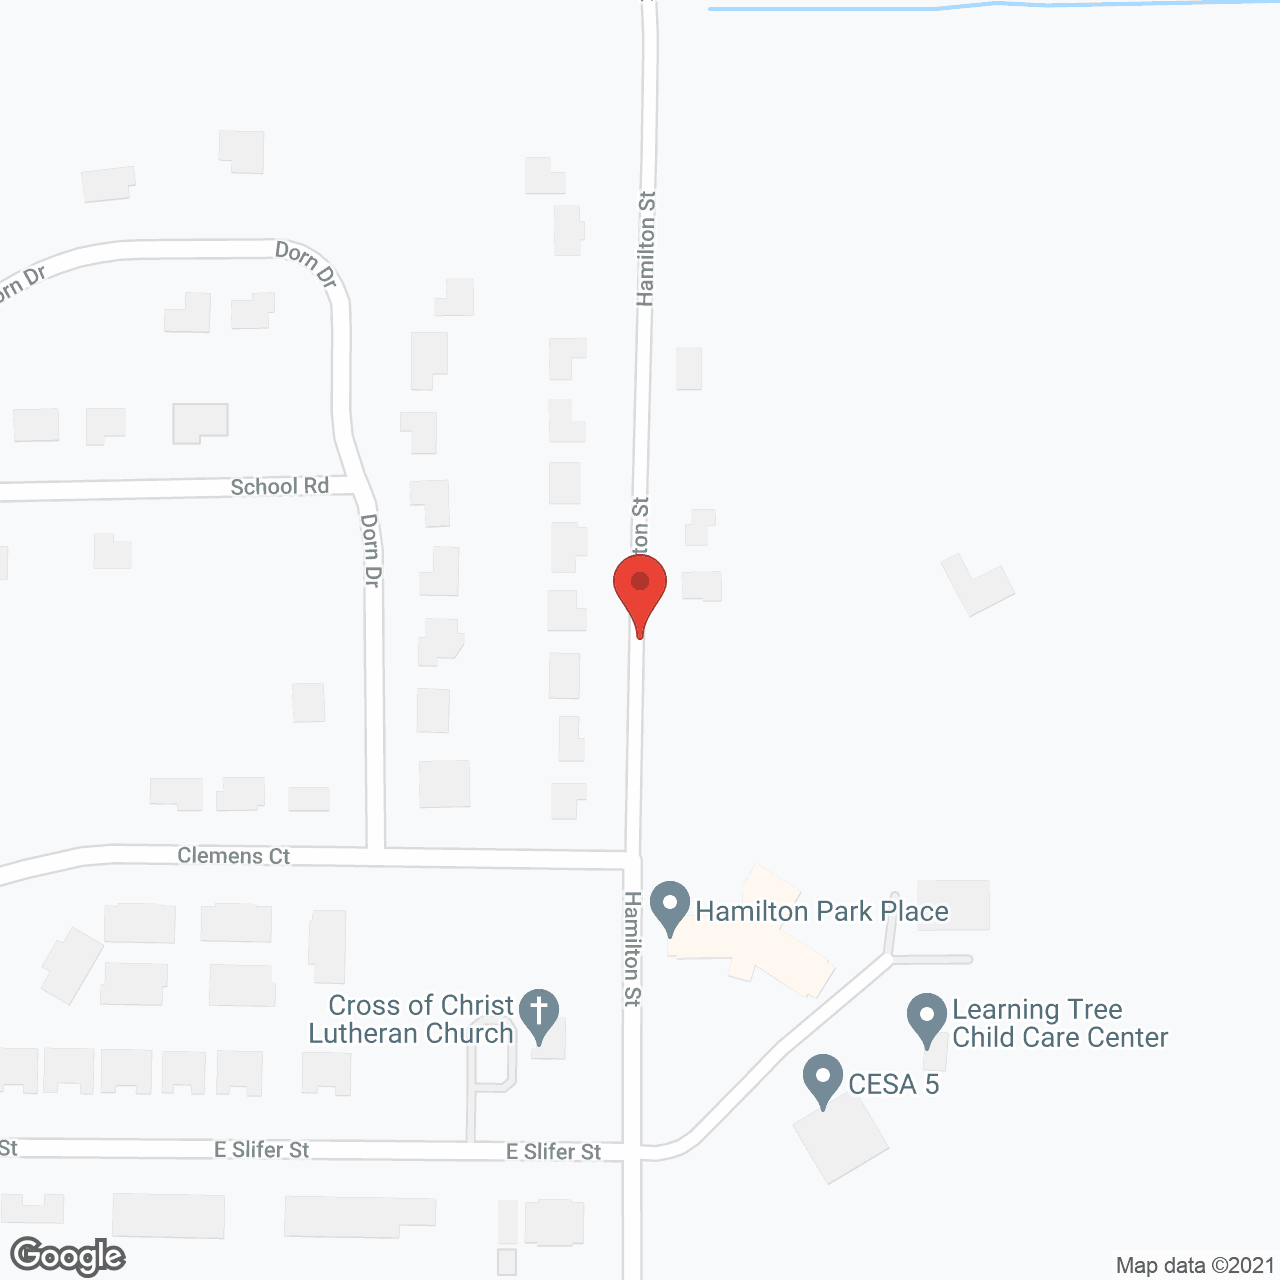 Hamilton Park Place in google map